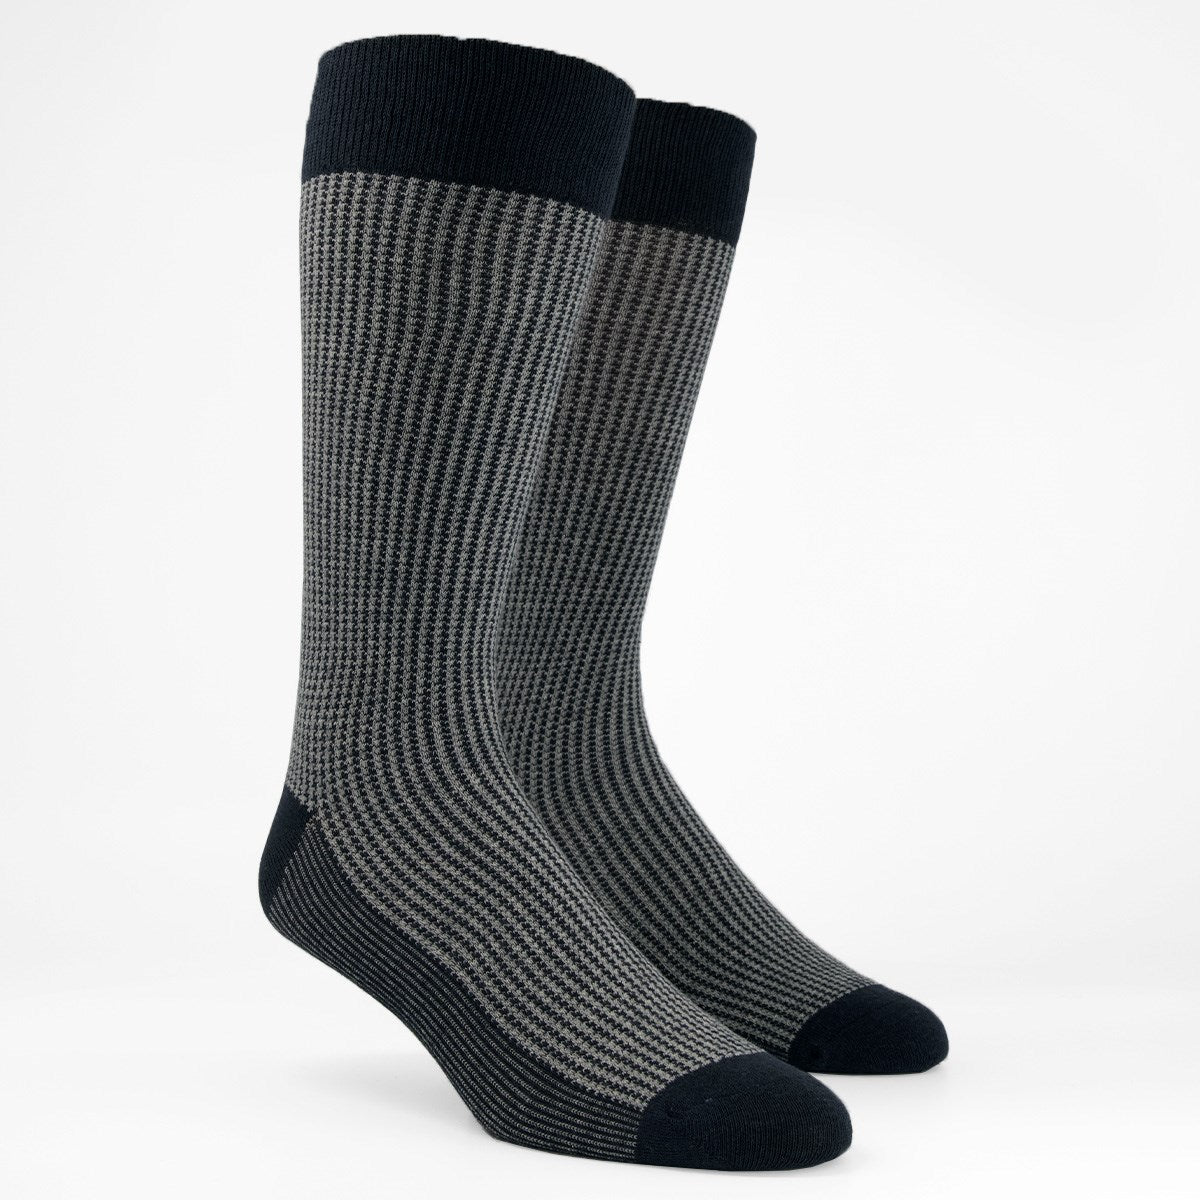 Micro Houndstooth Charcoal Dress Socks | Cotton Socks | Tie Bar